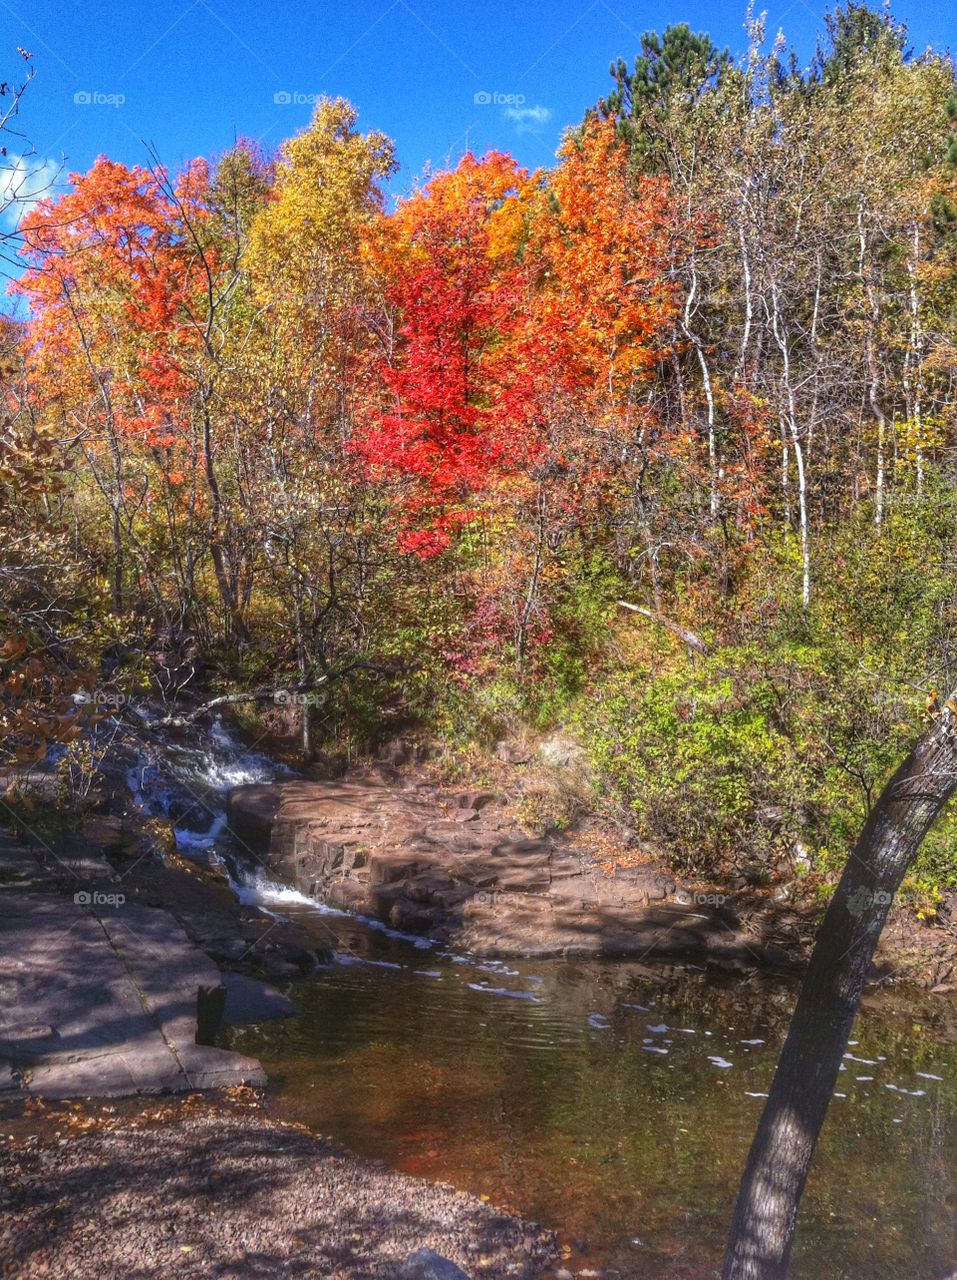 Fall colors in Minnesota. Nature walking